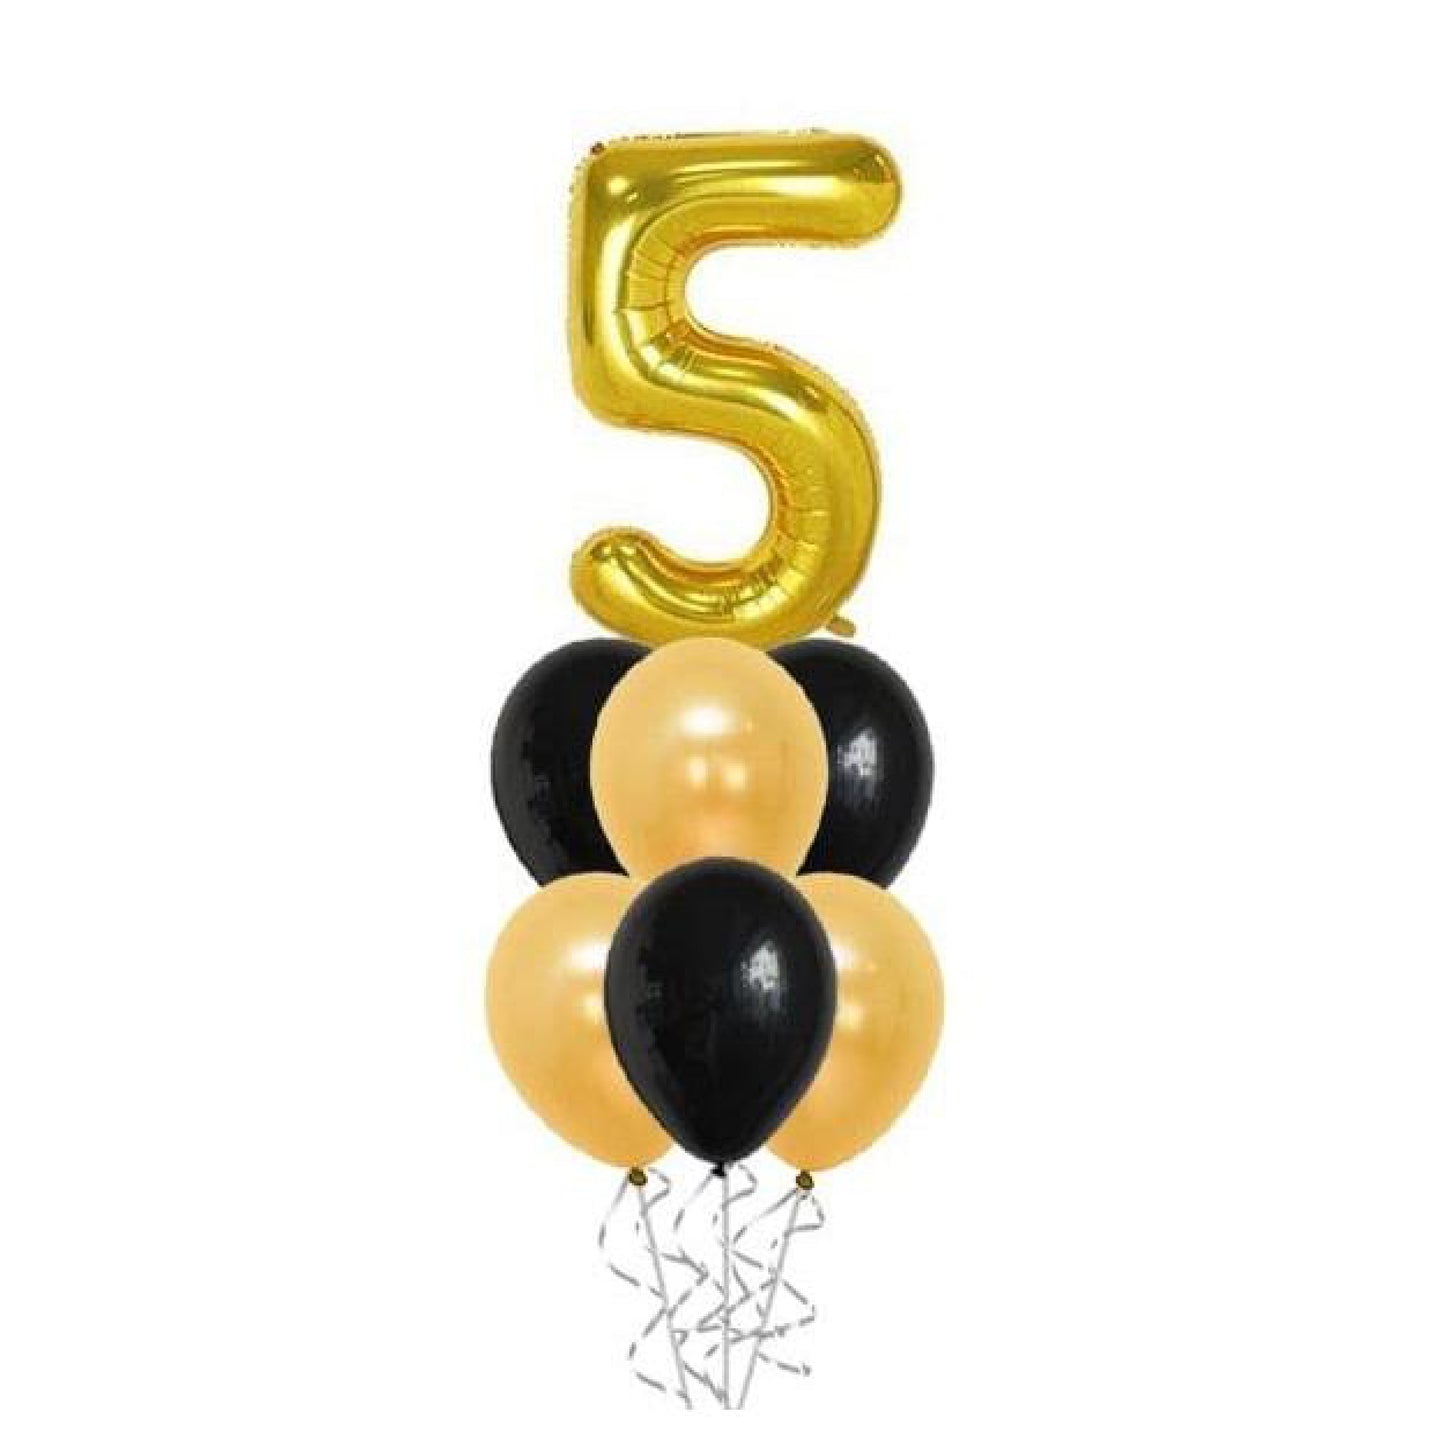 Single Number Birthday balloon bouquet